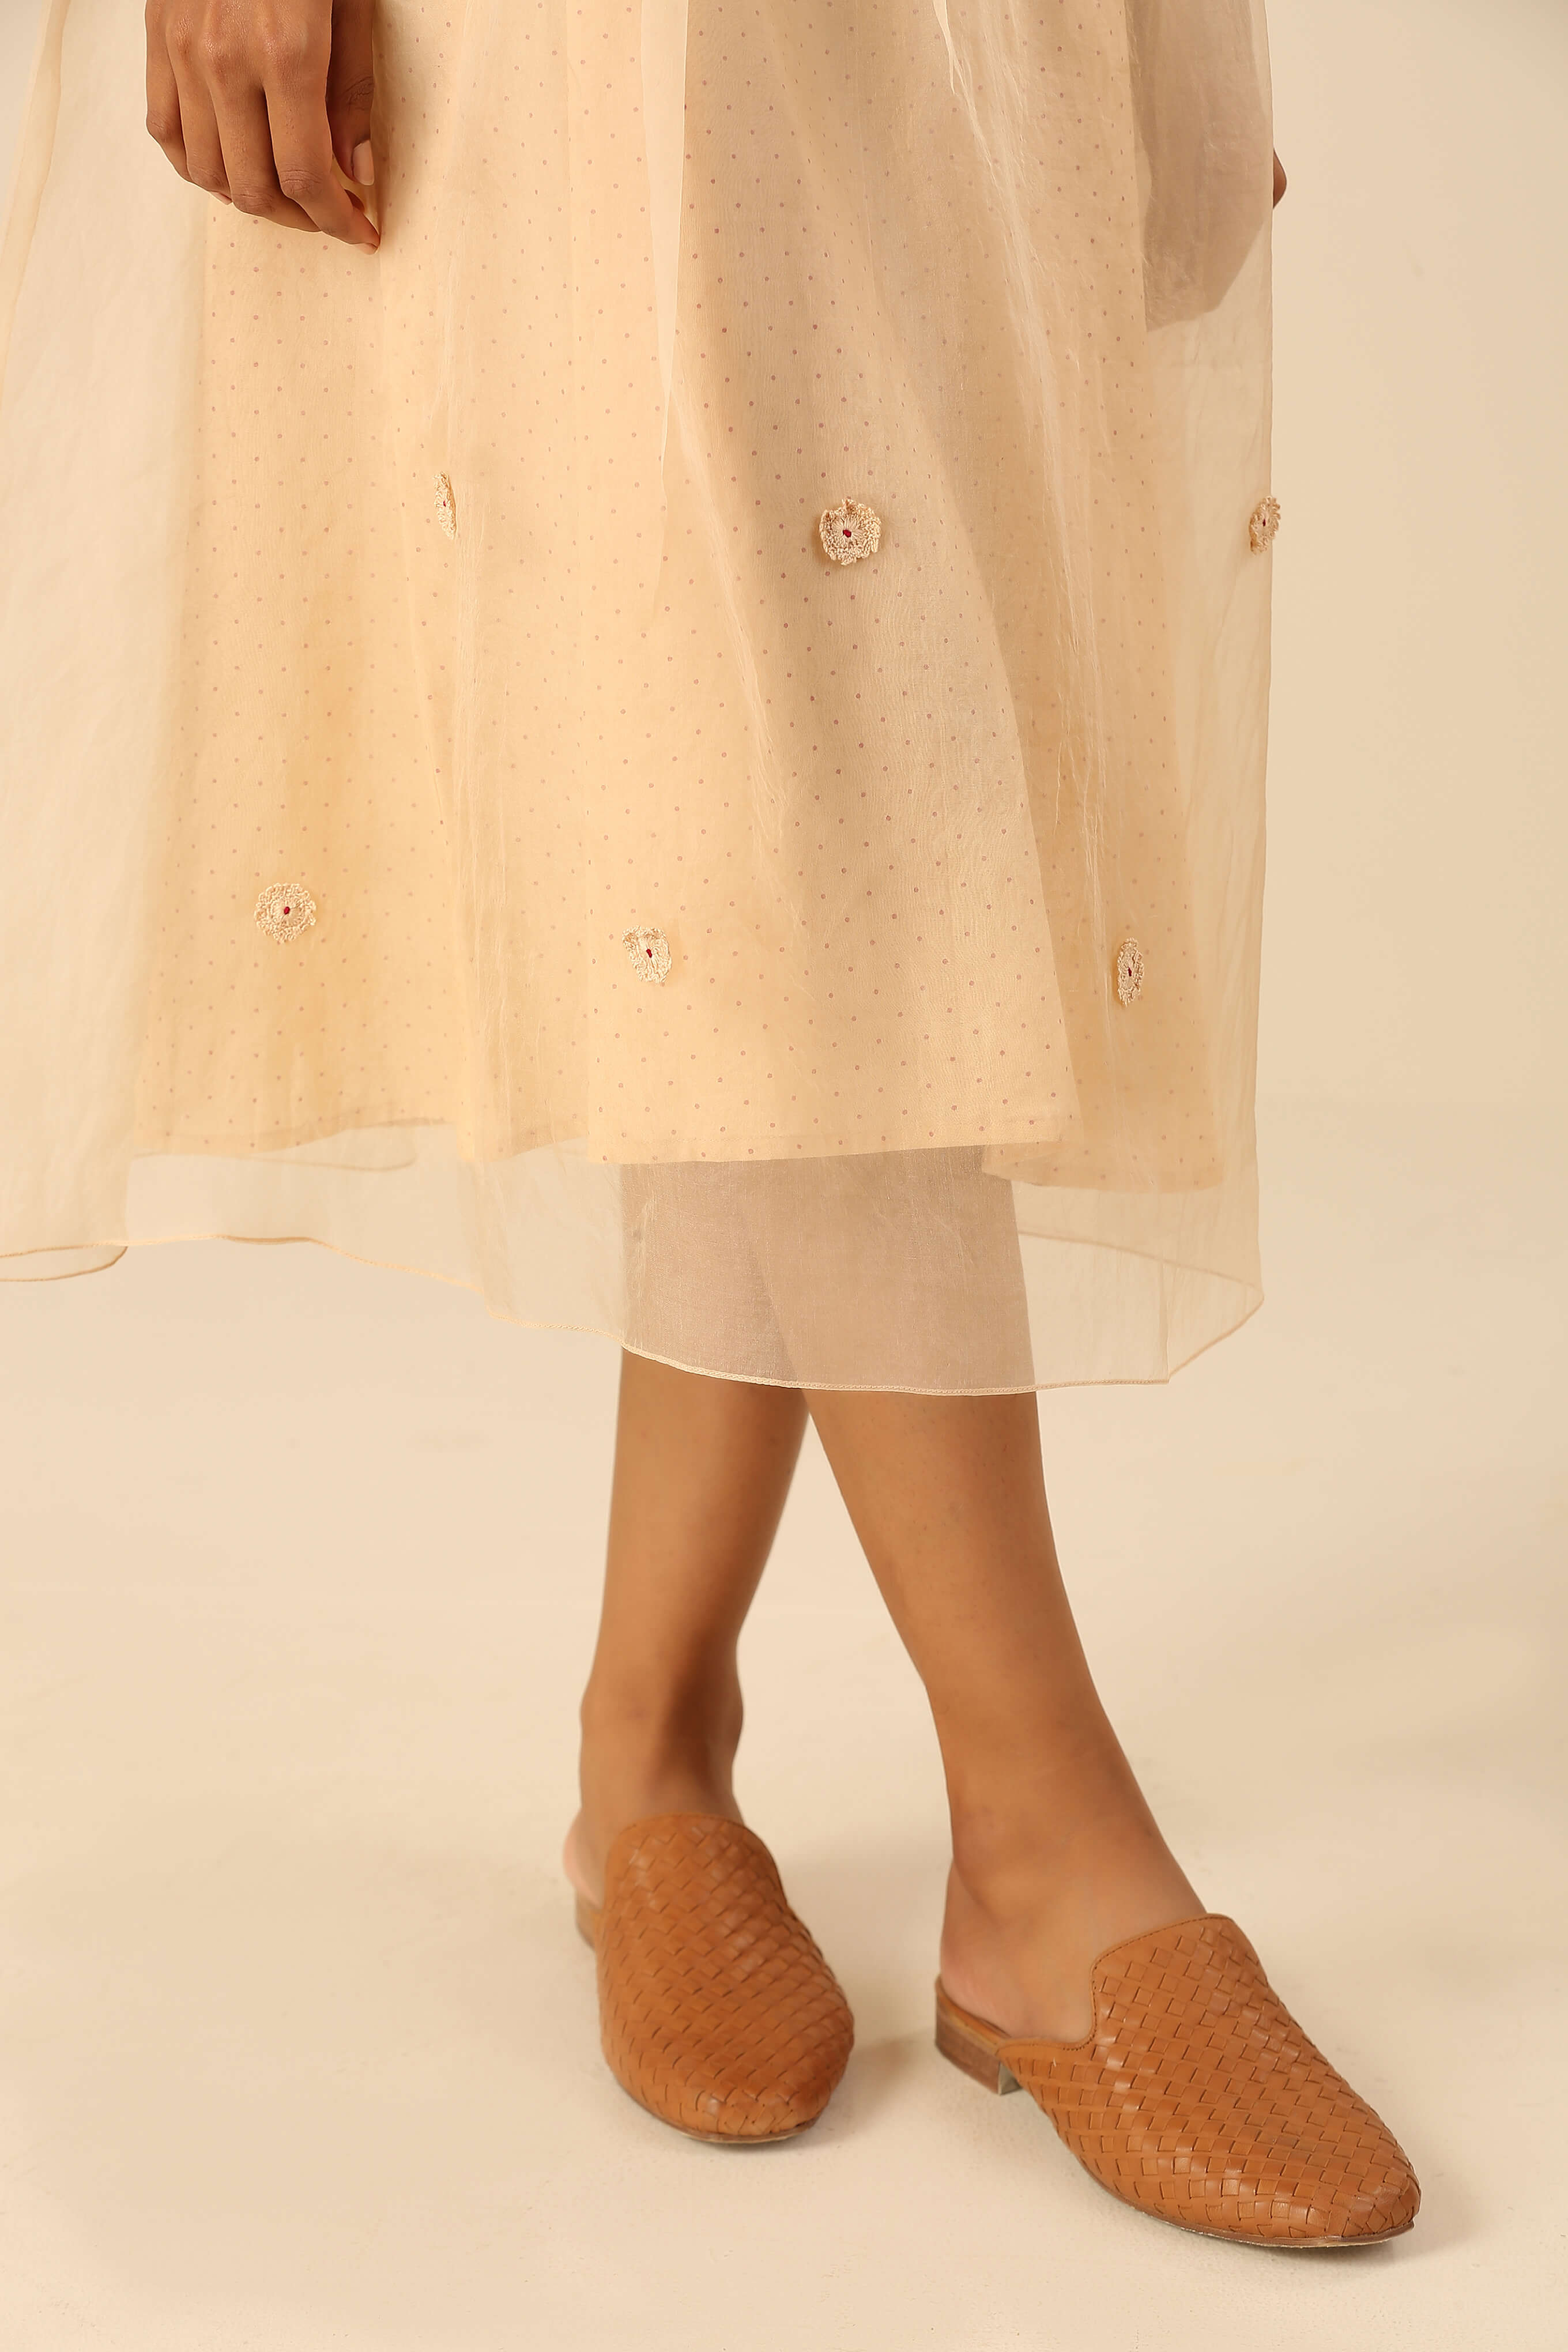 Paperwings Organza Midi Dress - Image 7